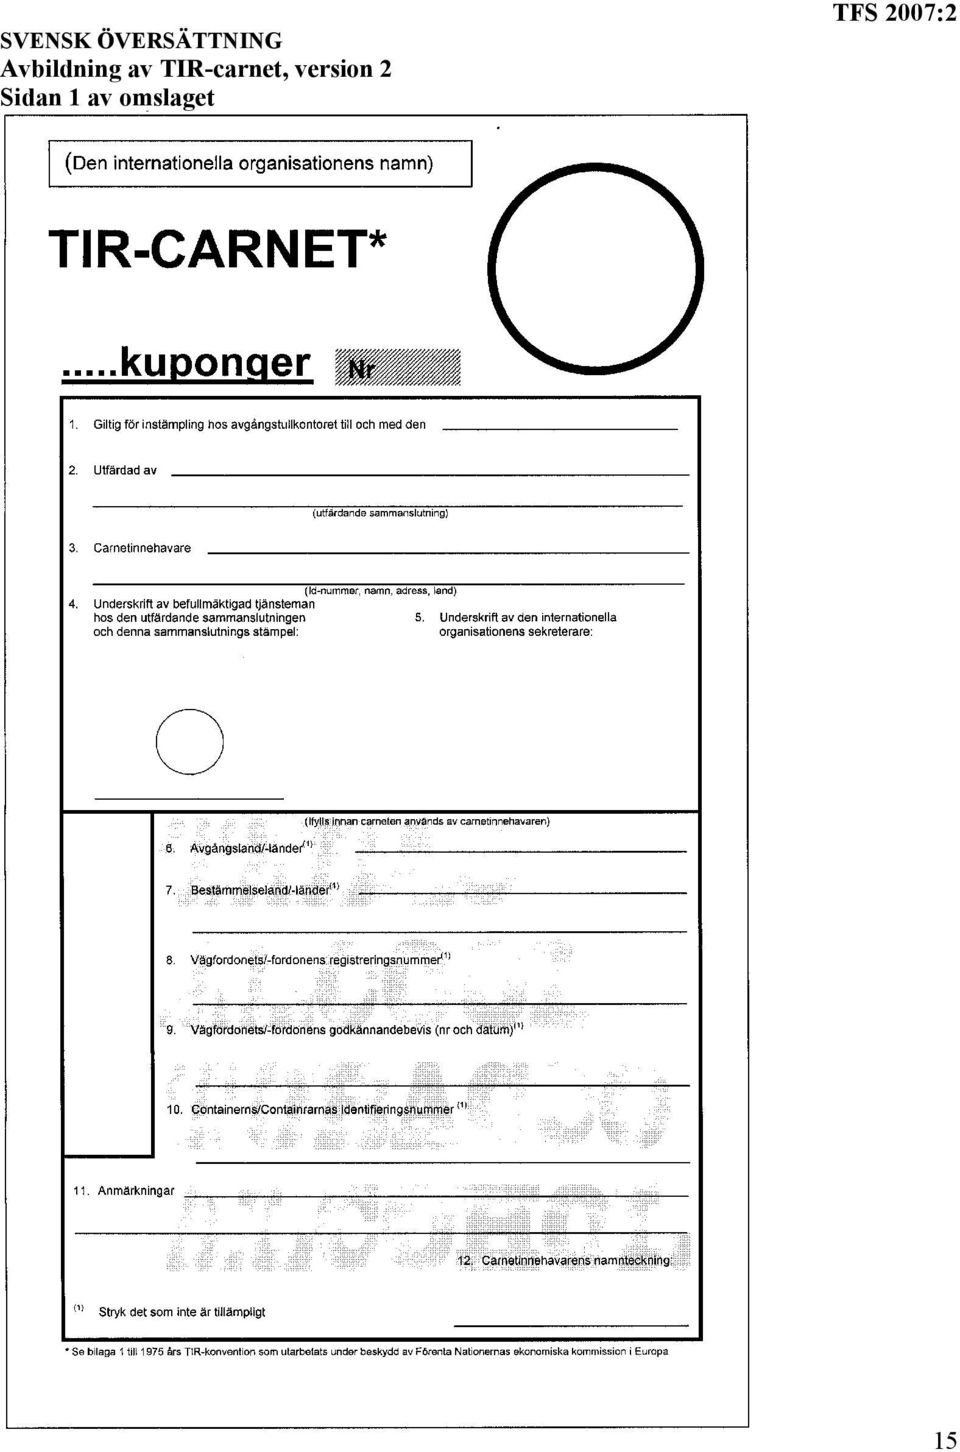 TIR-carnet, version